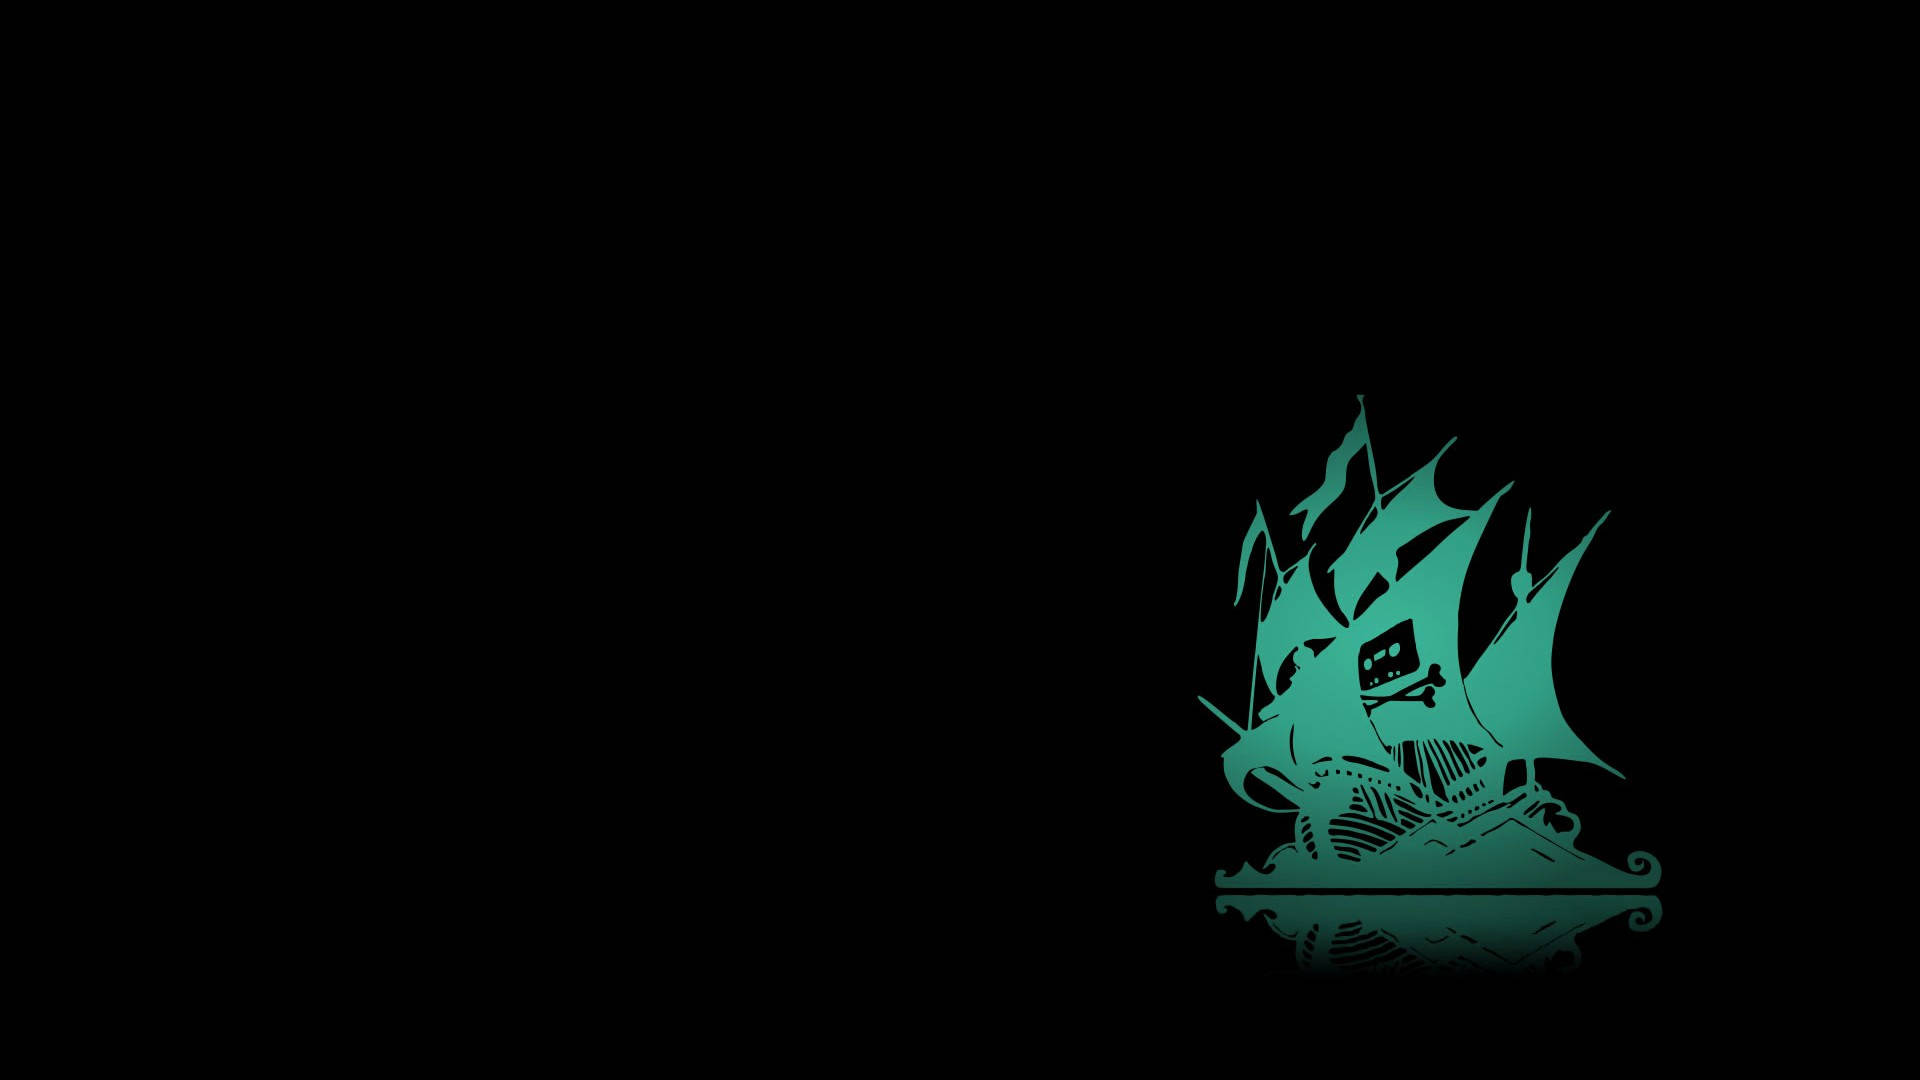 Teal Pirate Ship Wallpaper